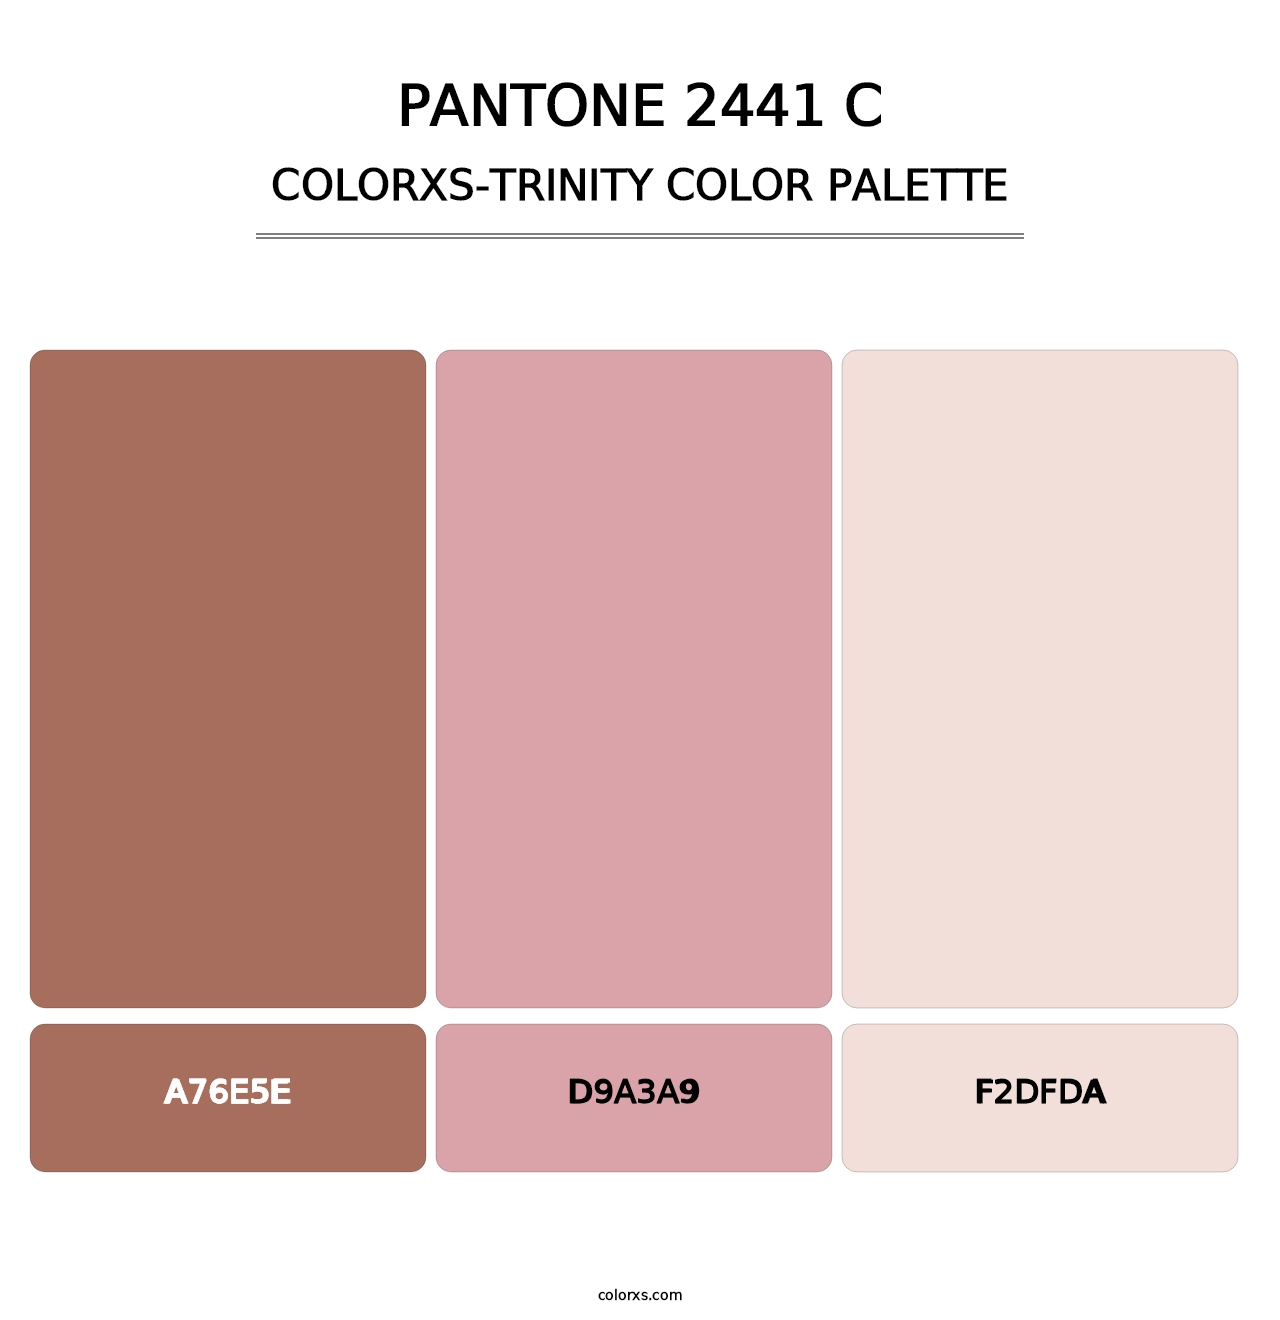 PANTONE 2441 C - Colorxs Trinity Palette